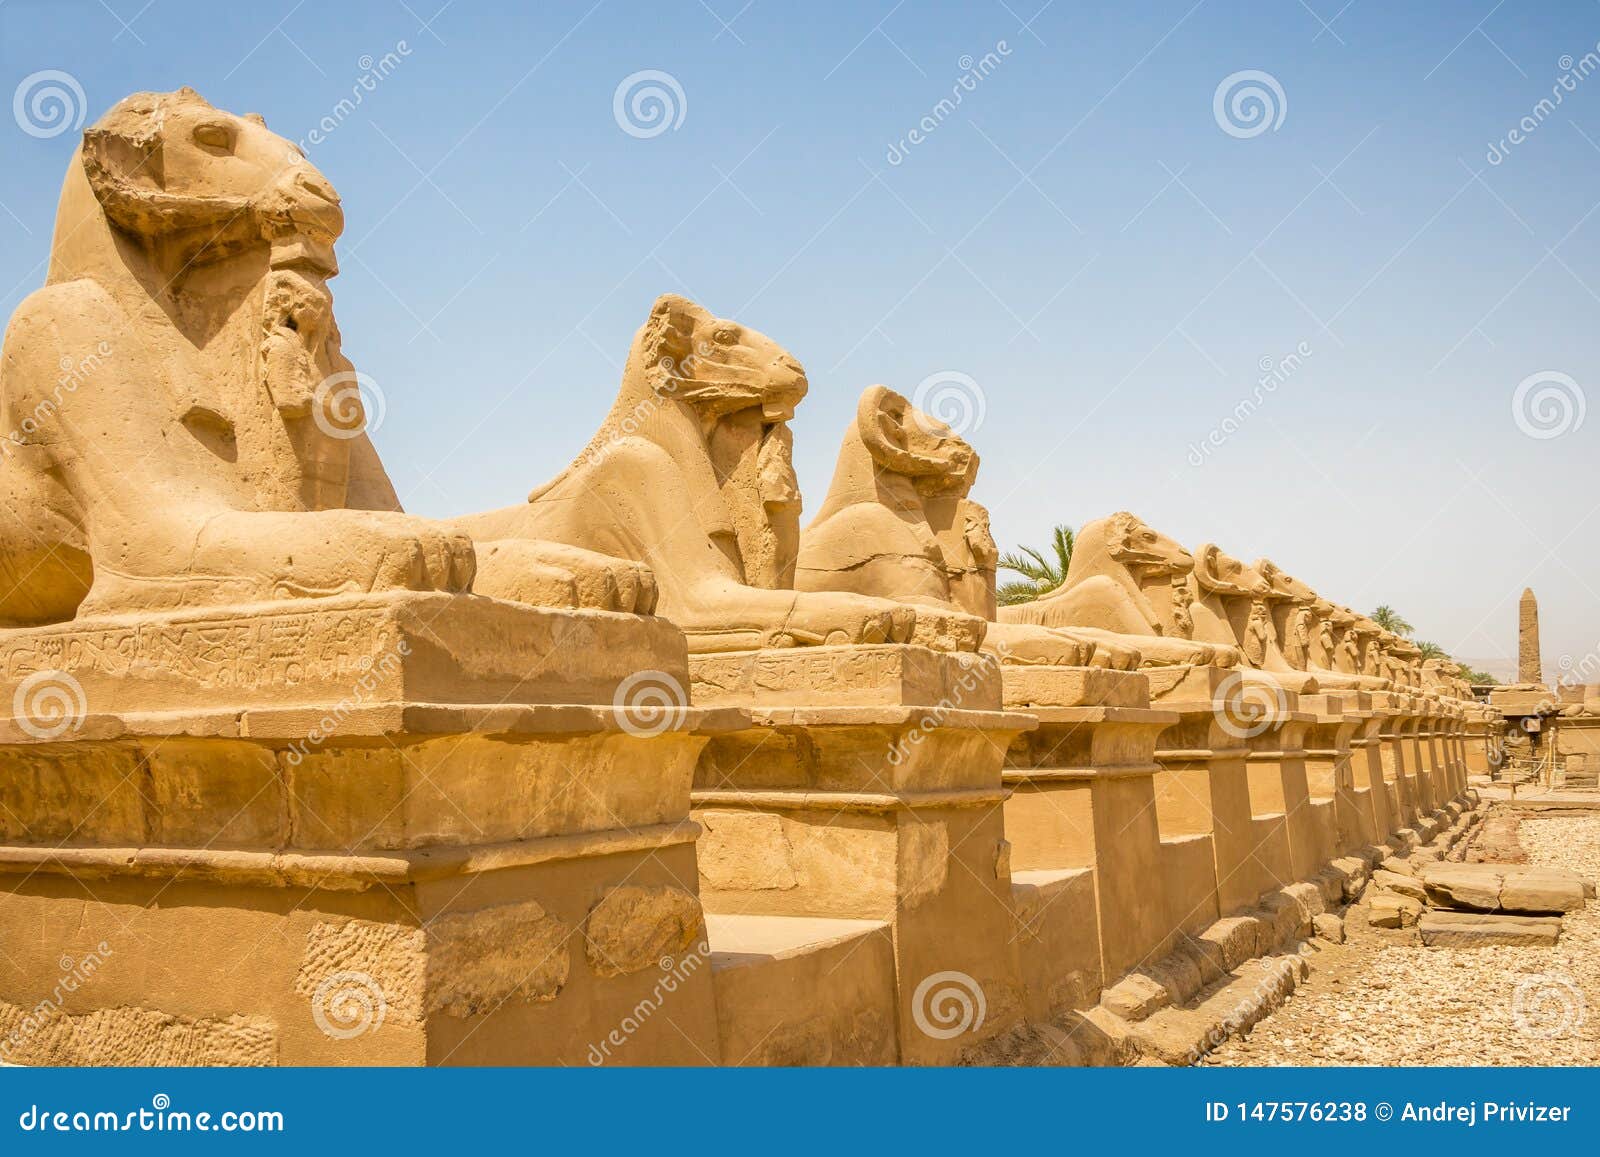 ram-headed sphinxes line the road outside the temple in karnak, egypt